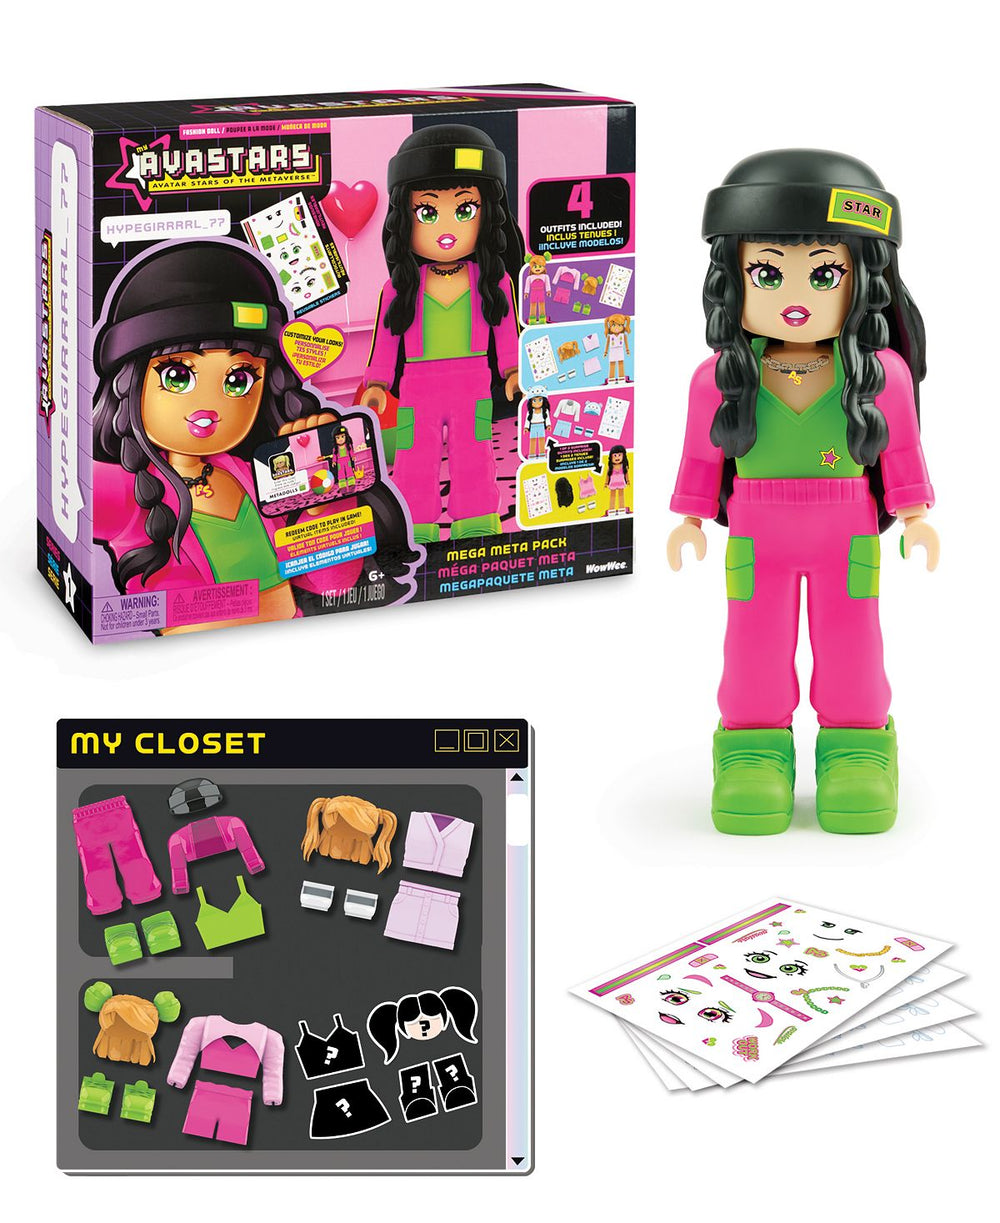 WowWee Avastars HypeGirl Fashion Doll - Mega Meta Look Pack